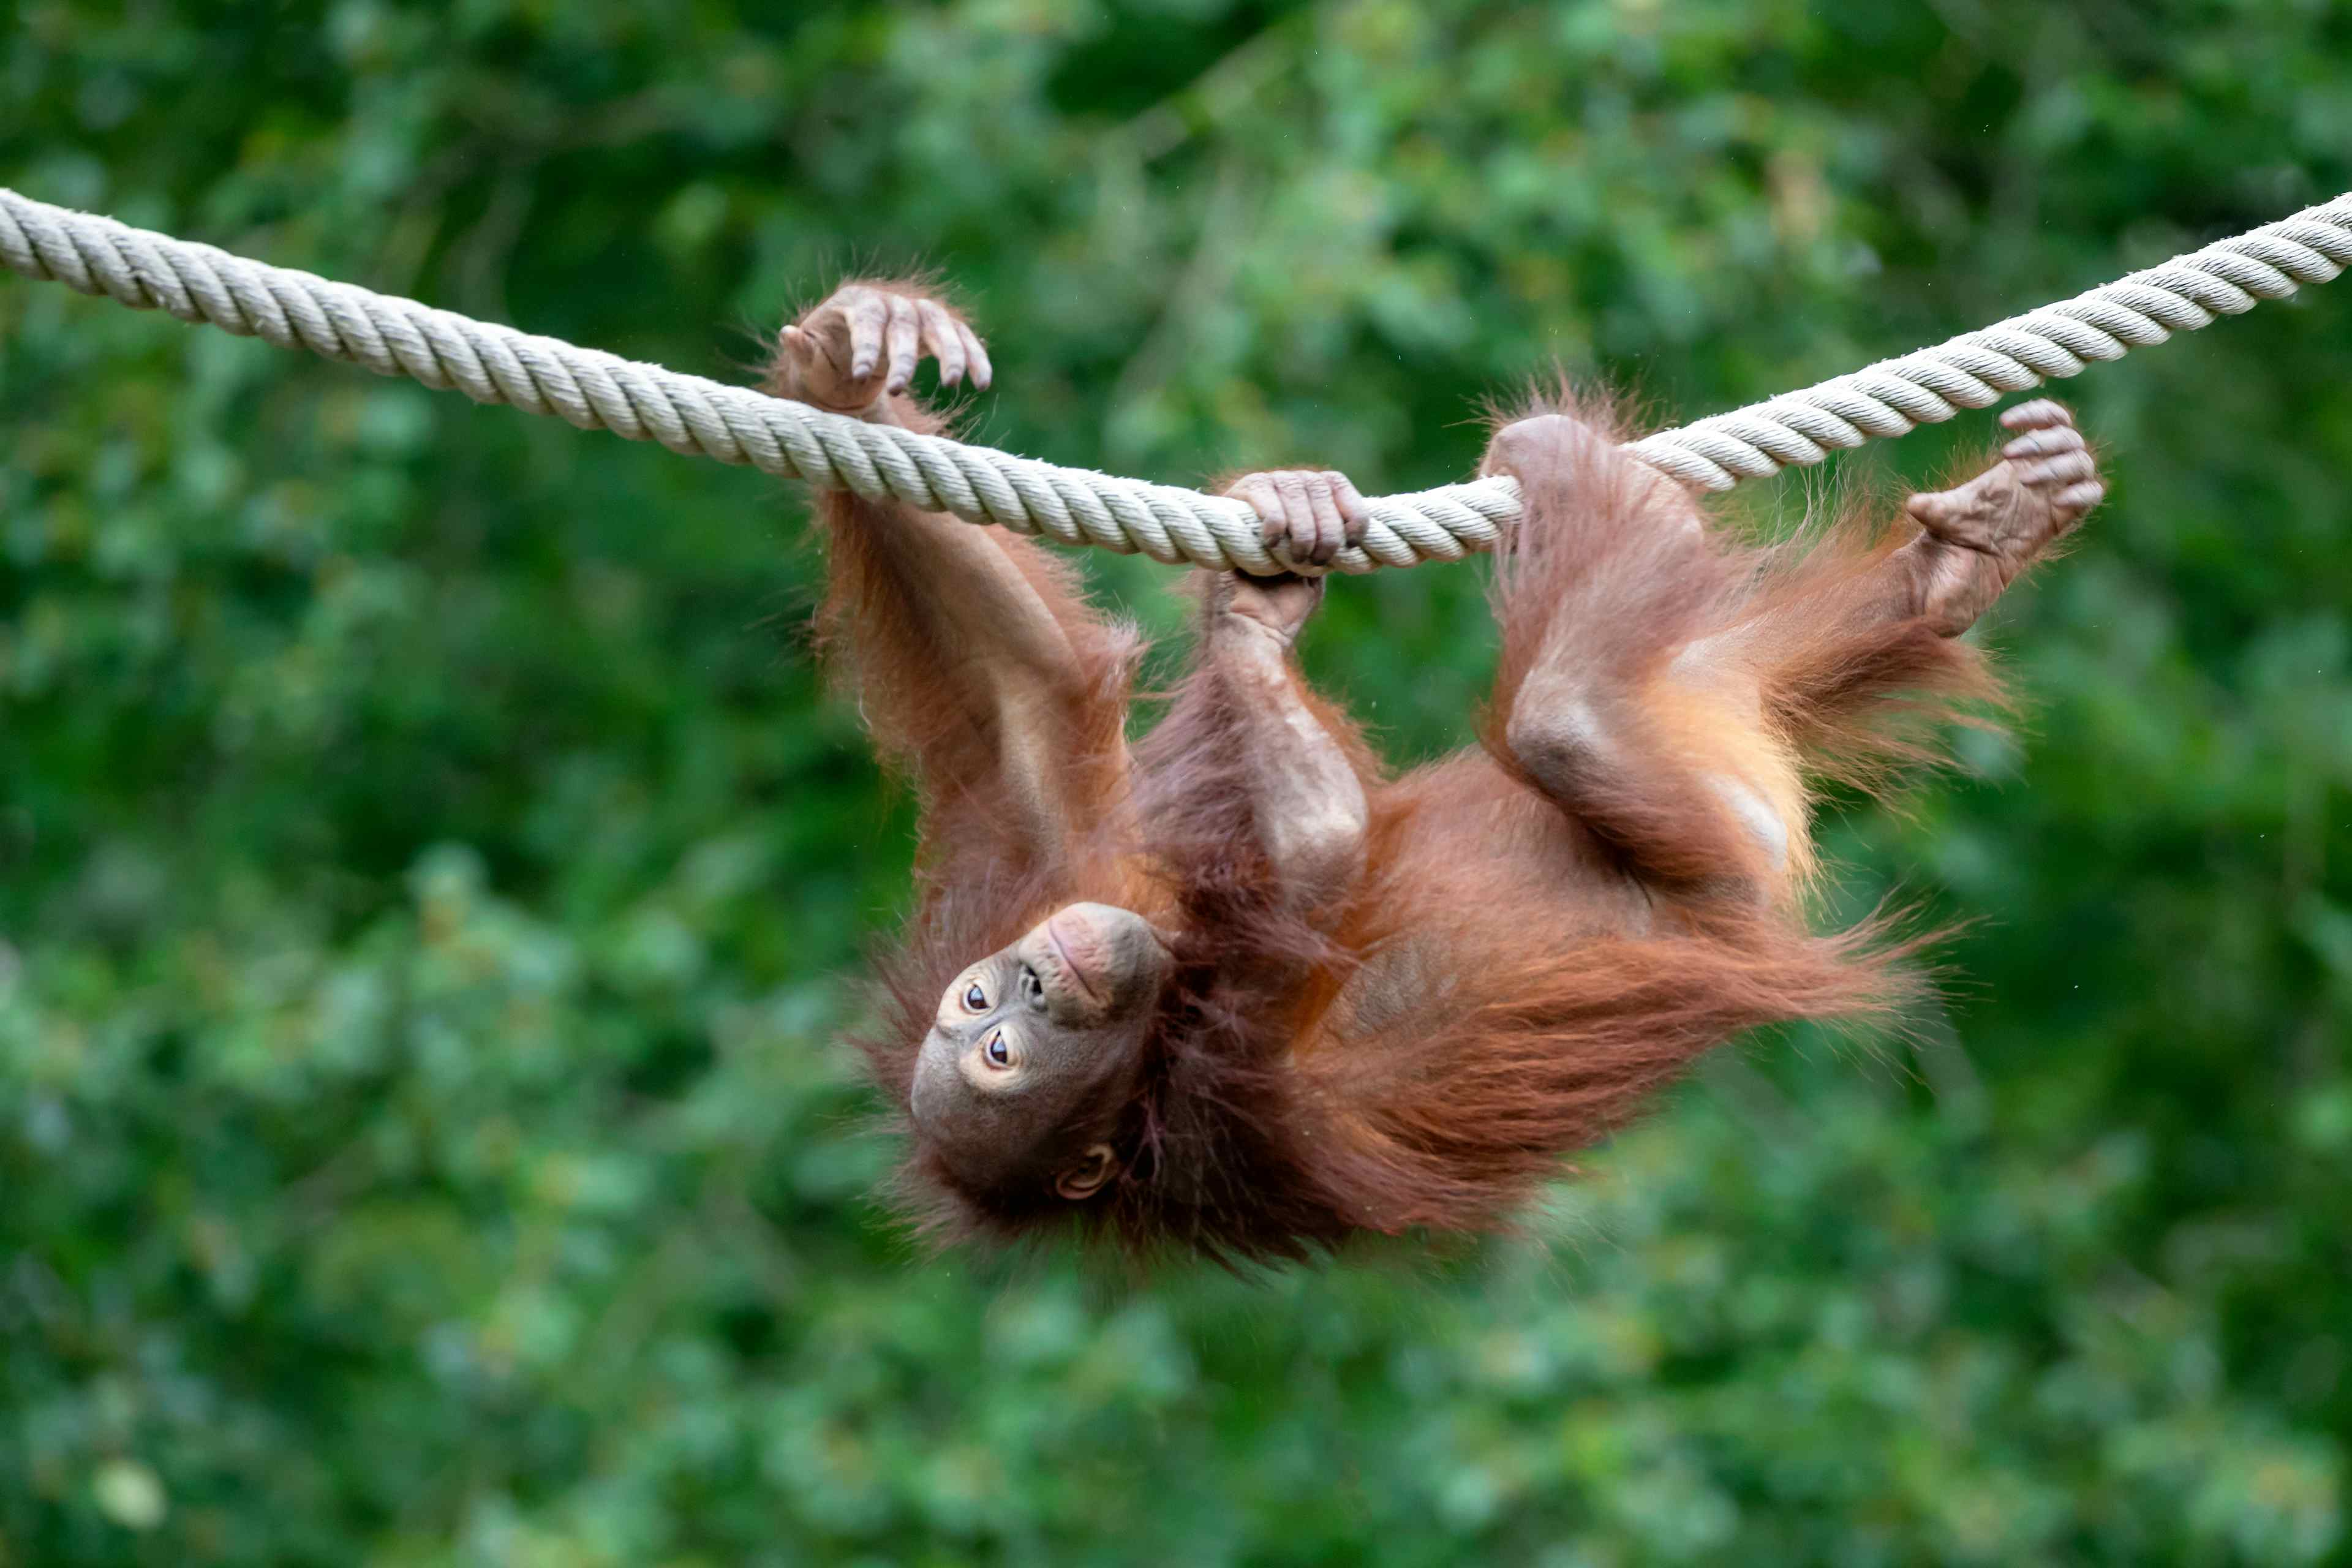 Protecting the rich biodiversity and increasingly scarce wildlife habitat including the endangered Bornean orangutan.